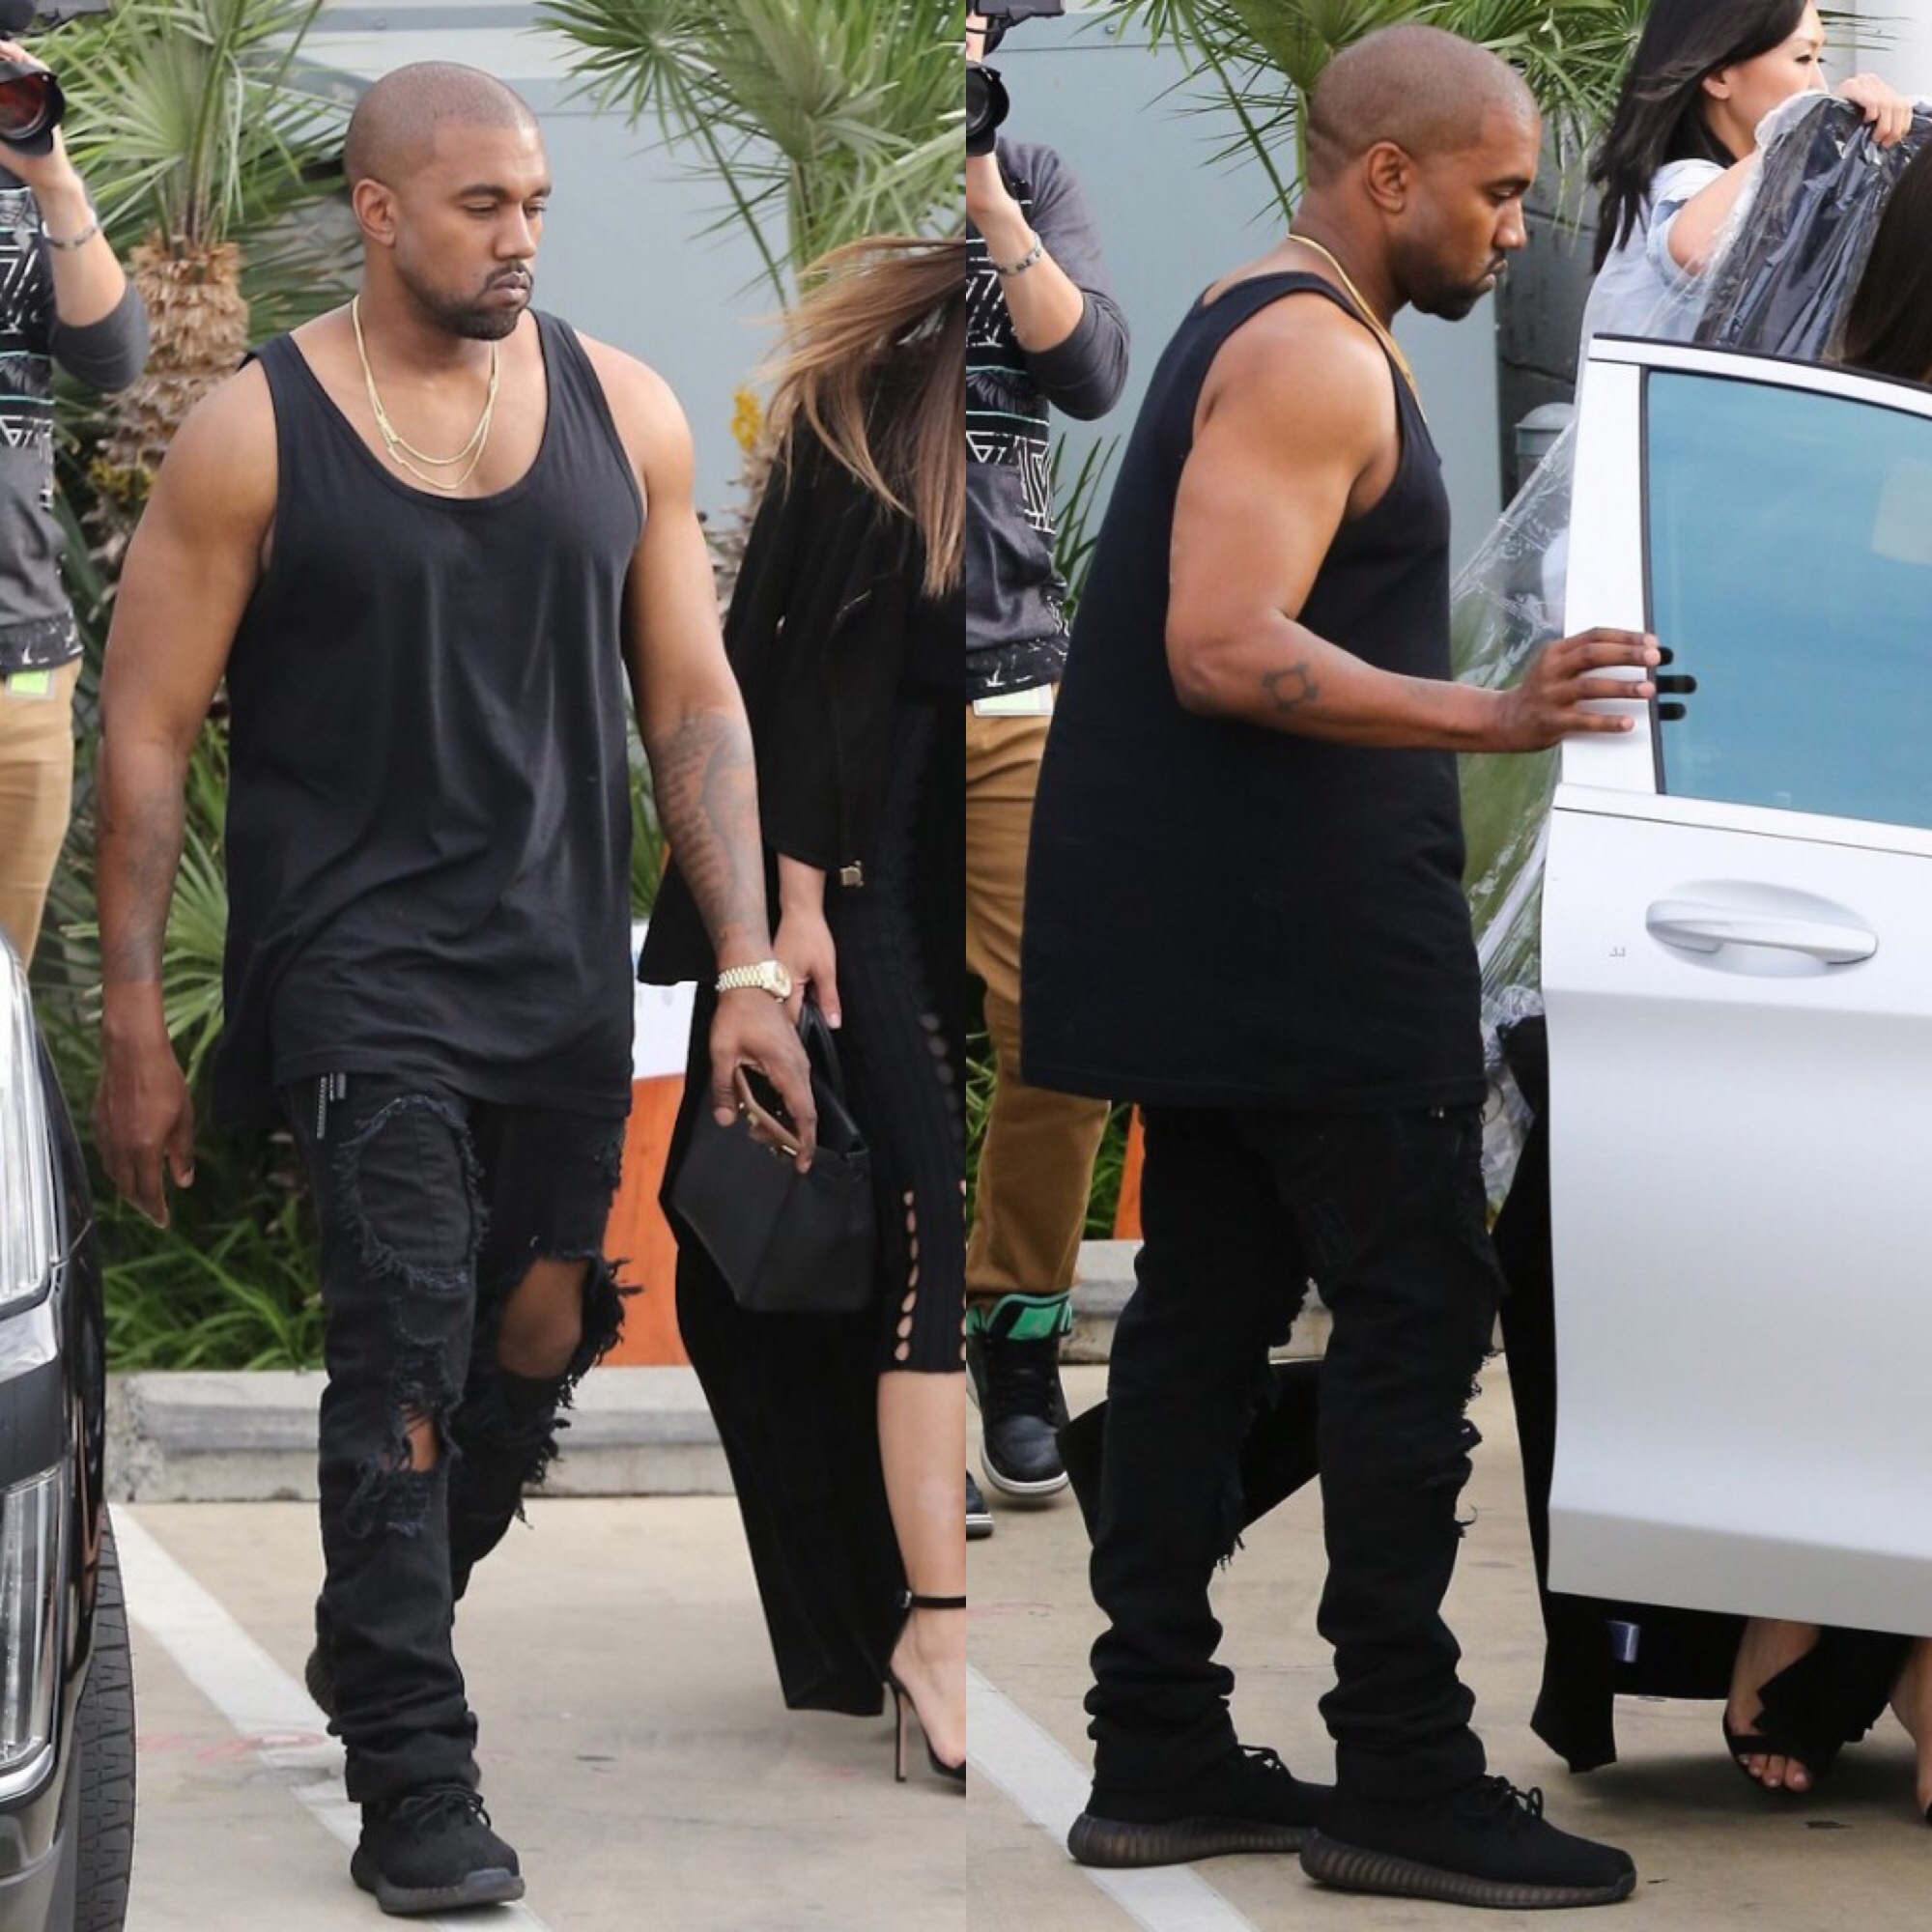 Spotted: Kanye rocking Yeezy Season 4 Shredded Jeans